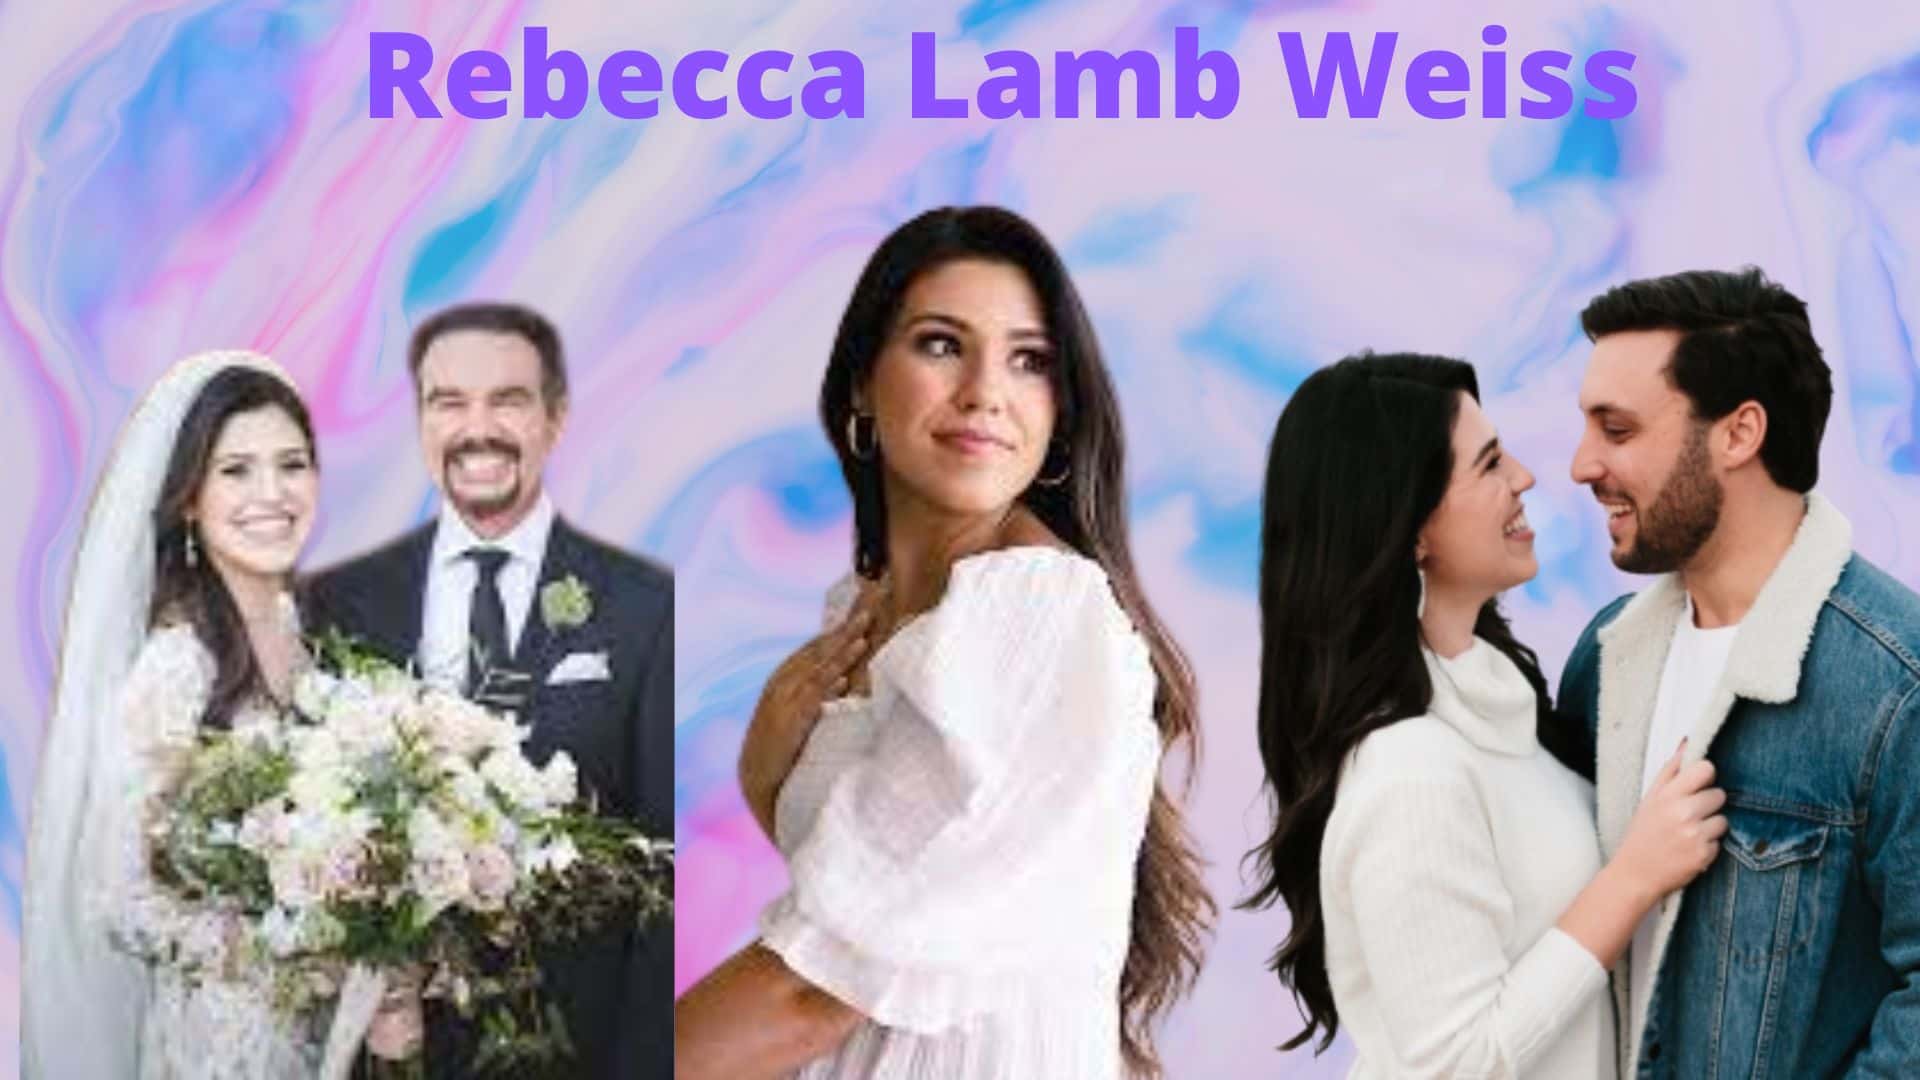 Rebecca Lamb Weiss